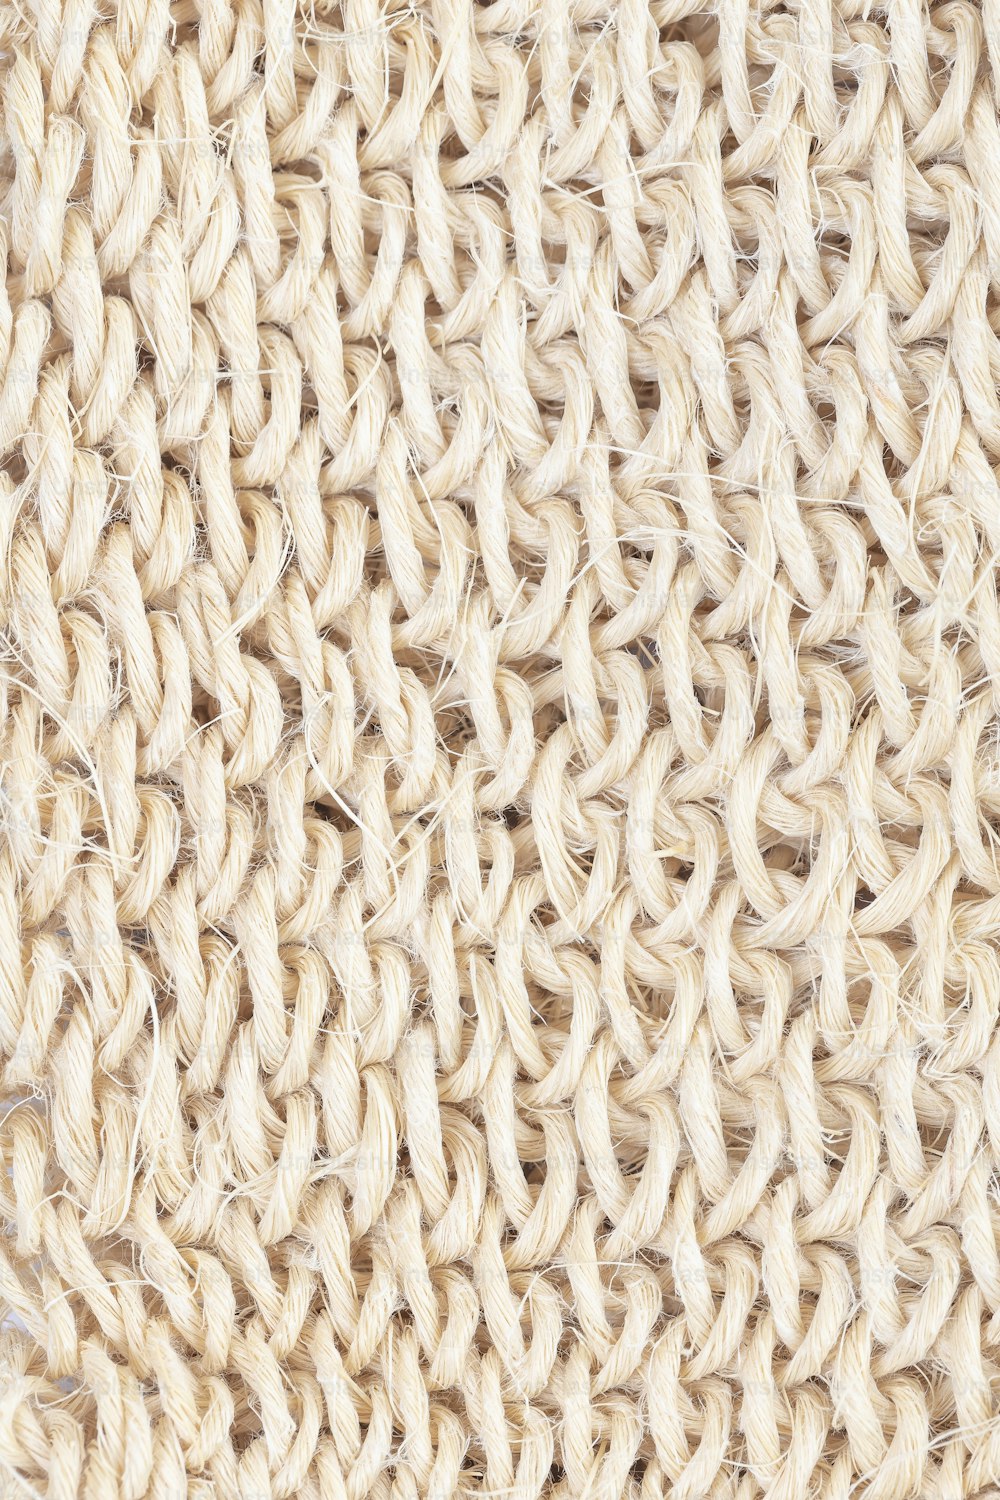 Premium Photo  Textures of wool cloth